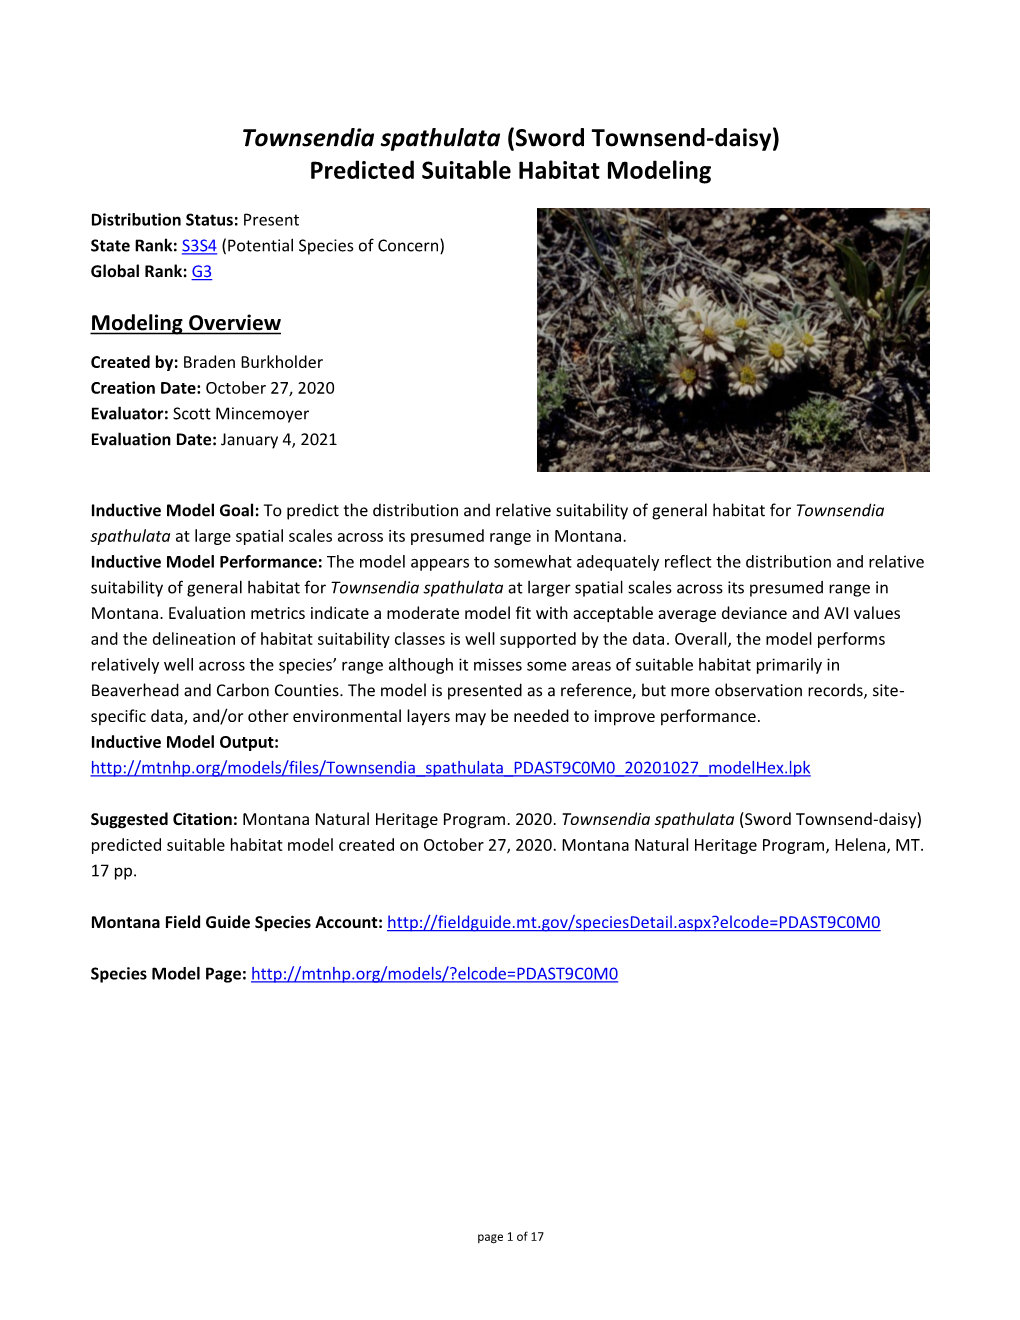 Townsendia Spathulata (Sword Townsend-Daisy) Predicted Suitable Habitat Modeling